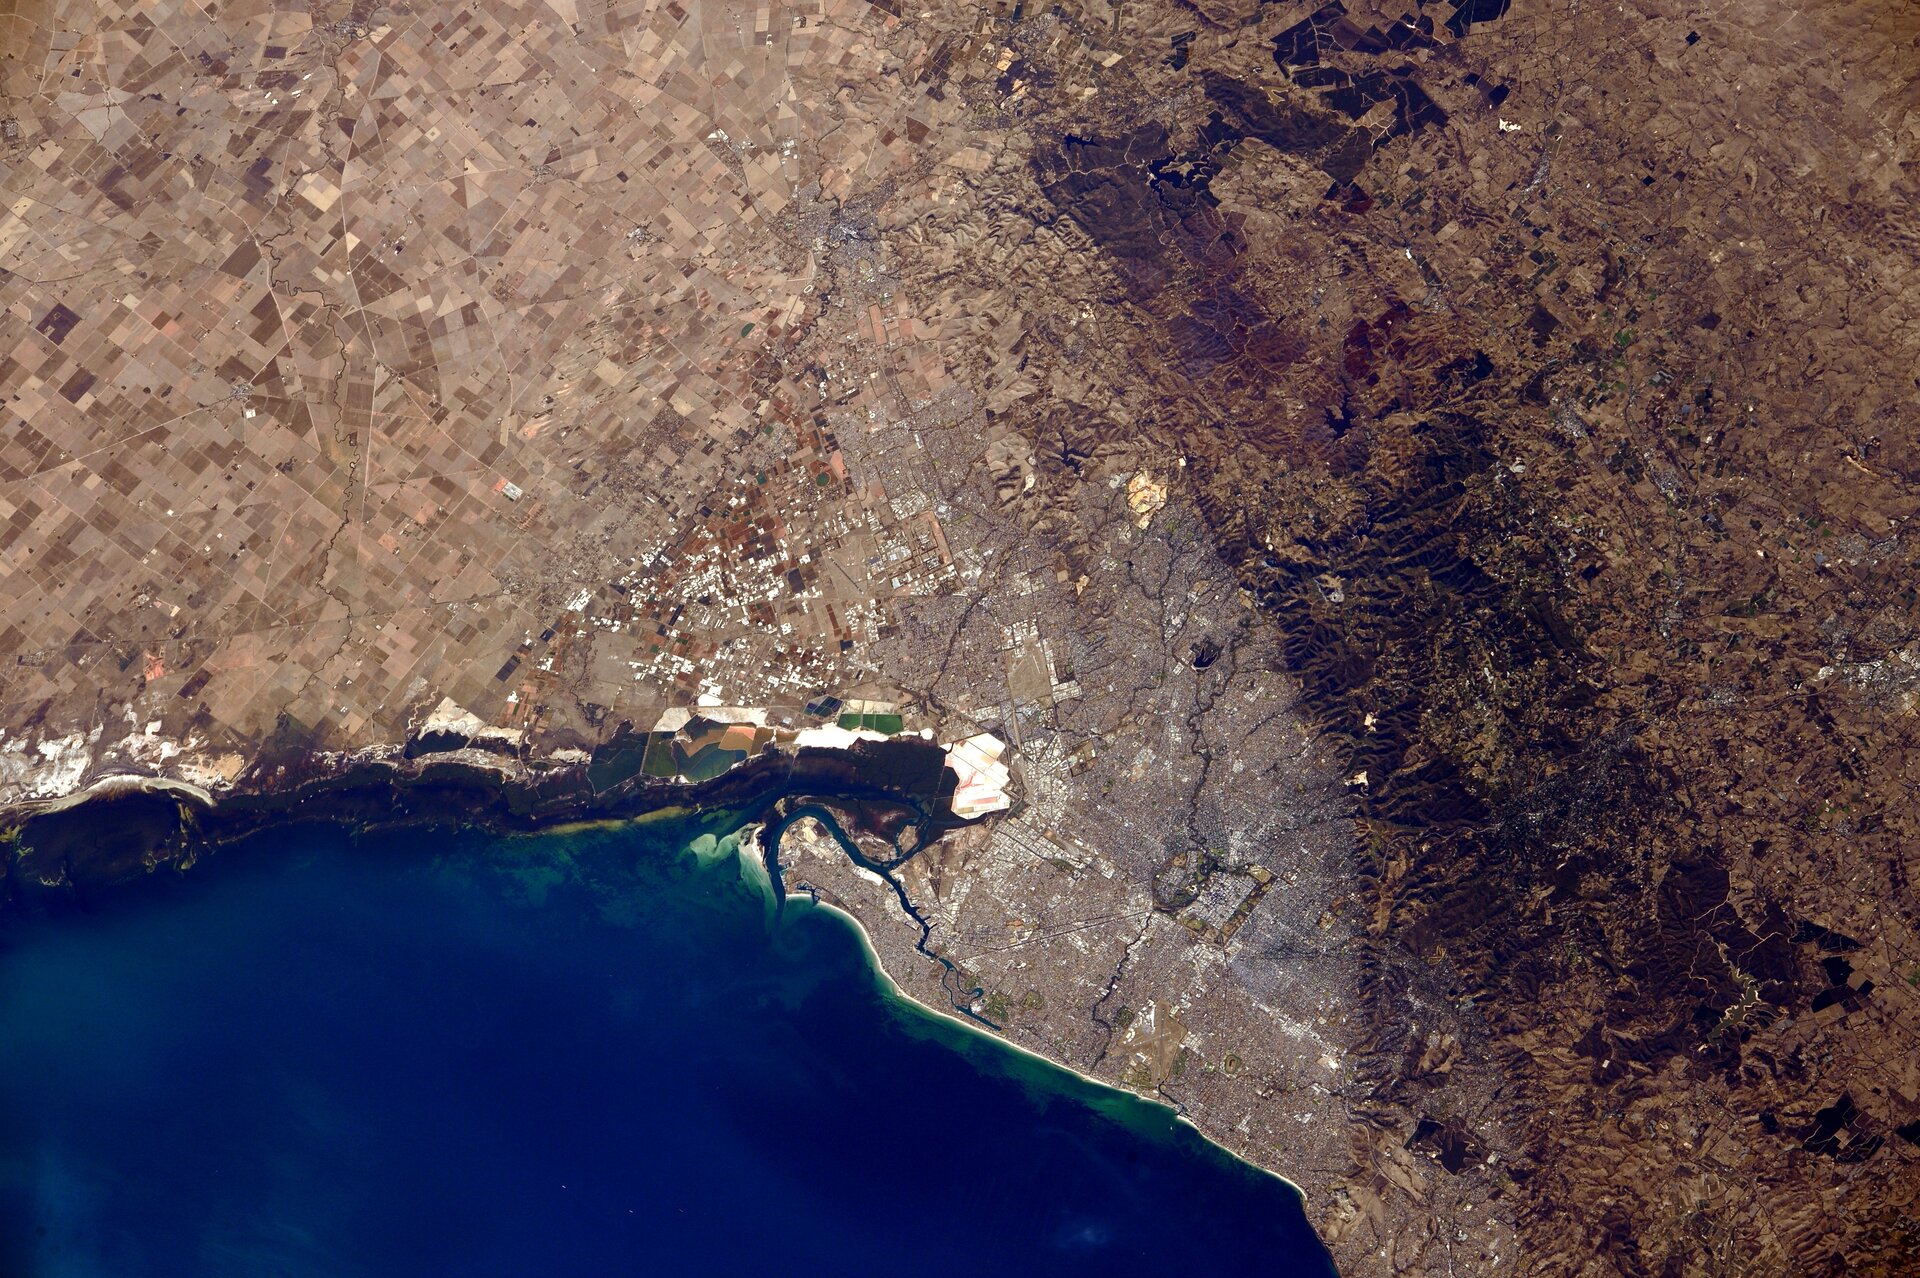 Adelaide, Australia as sen from the ISS